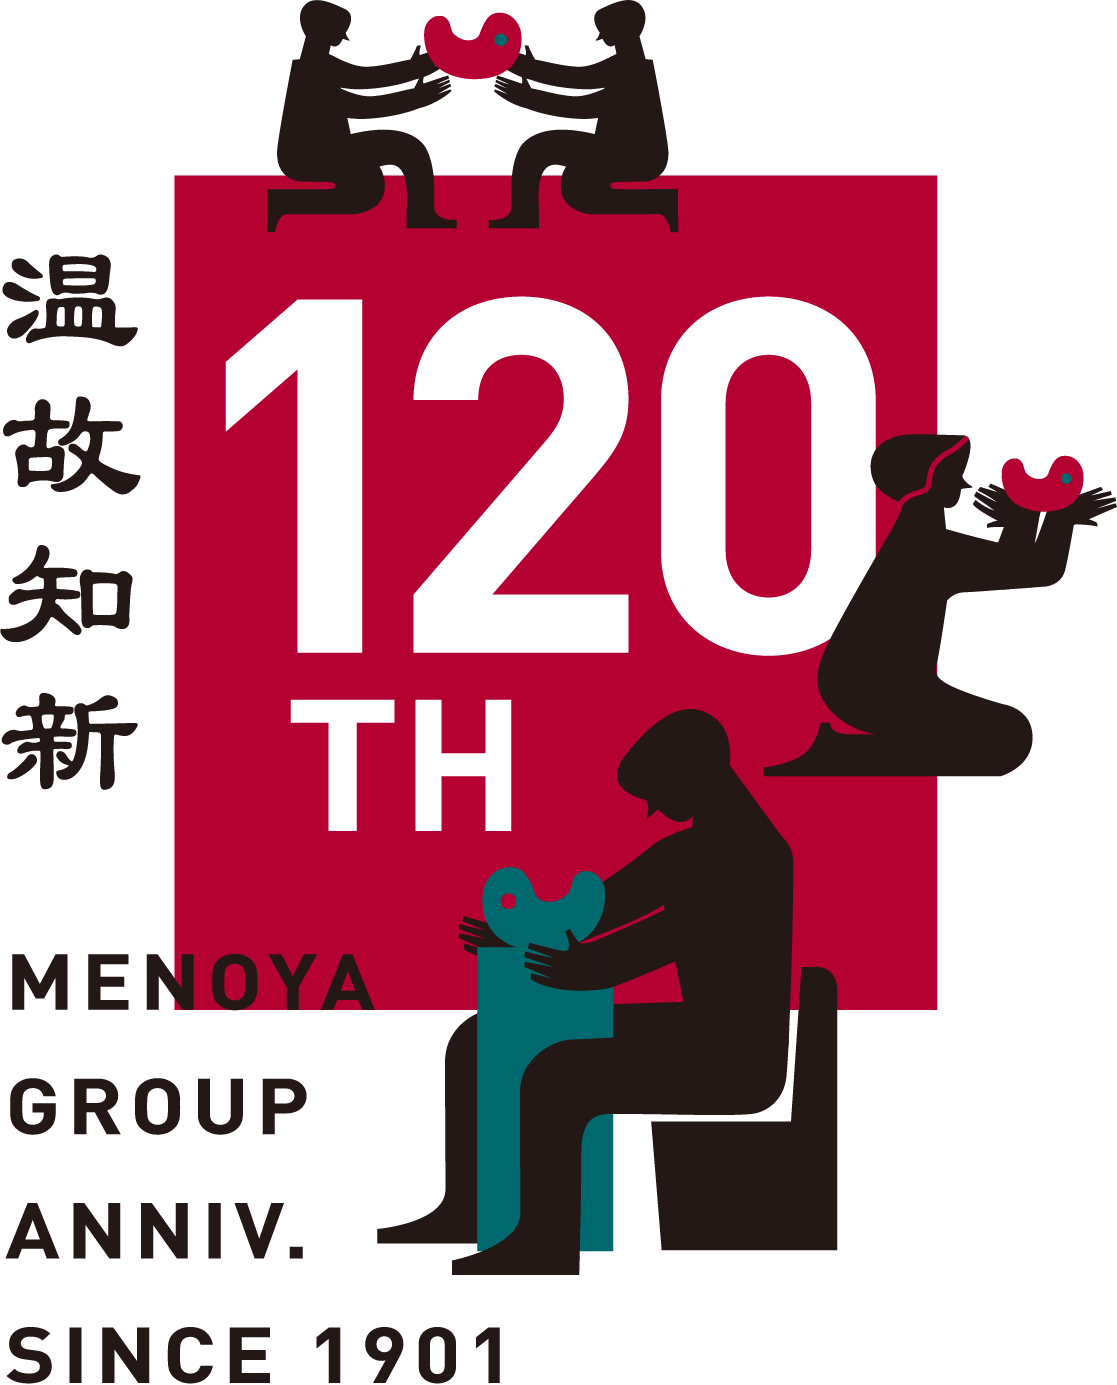 120th MENOYA GROUP ANNIV. SINCE 1901